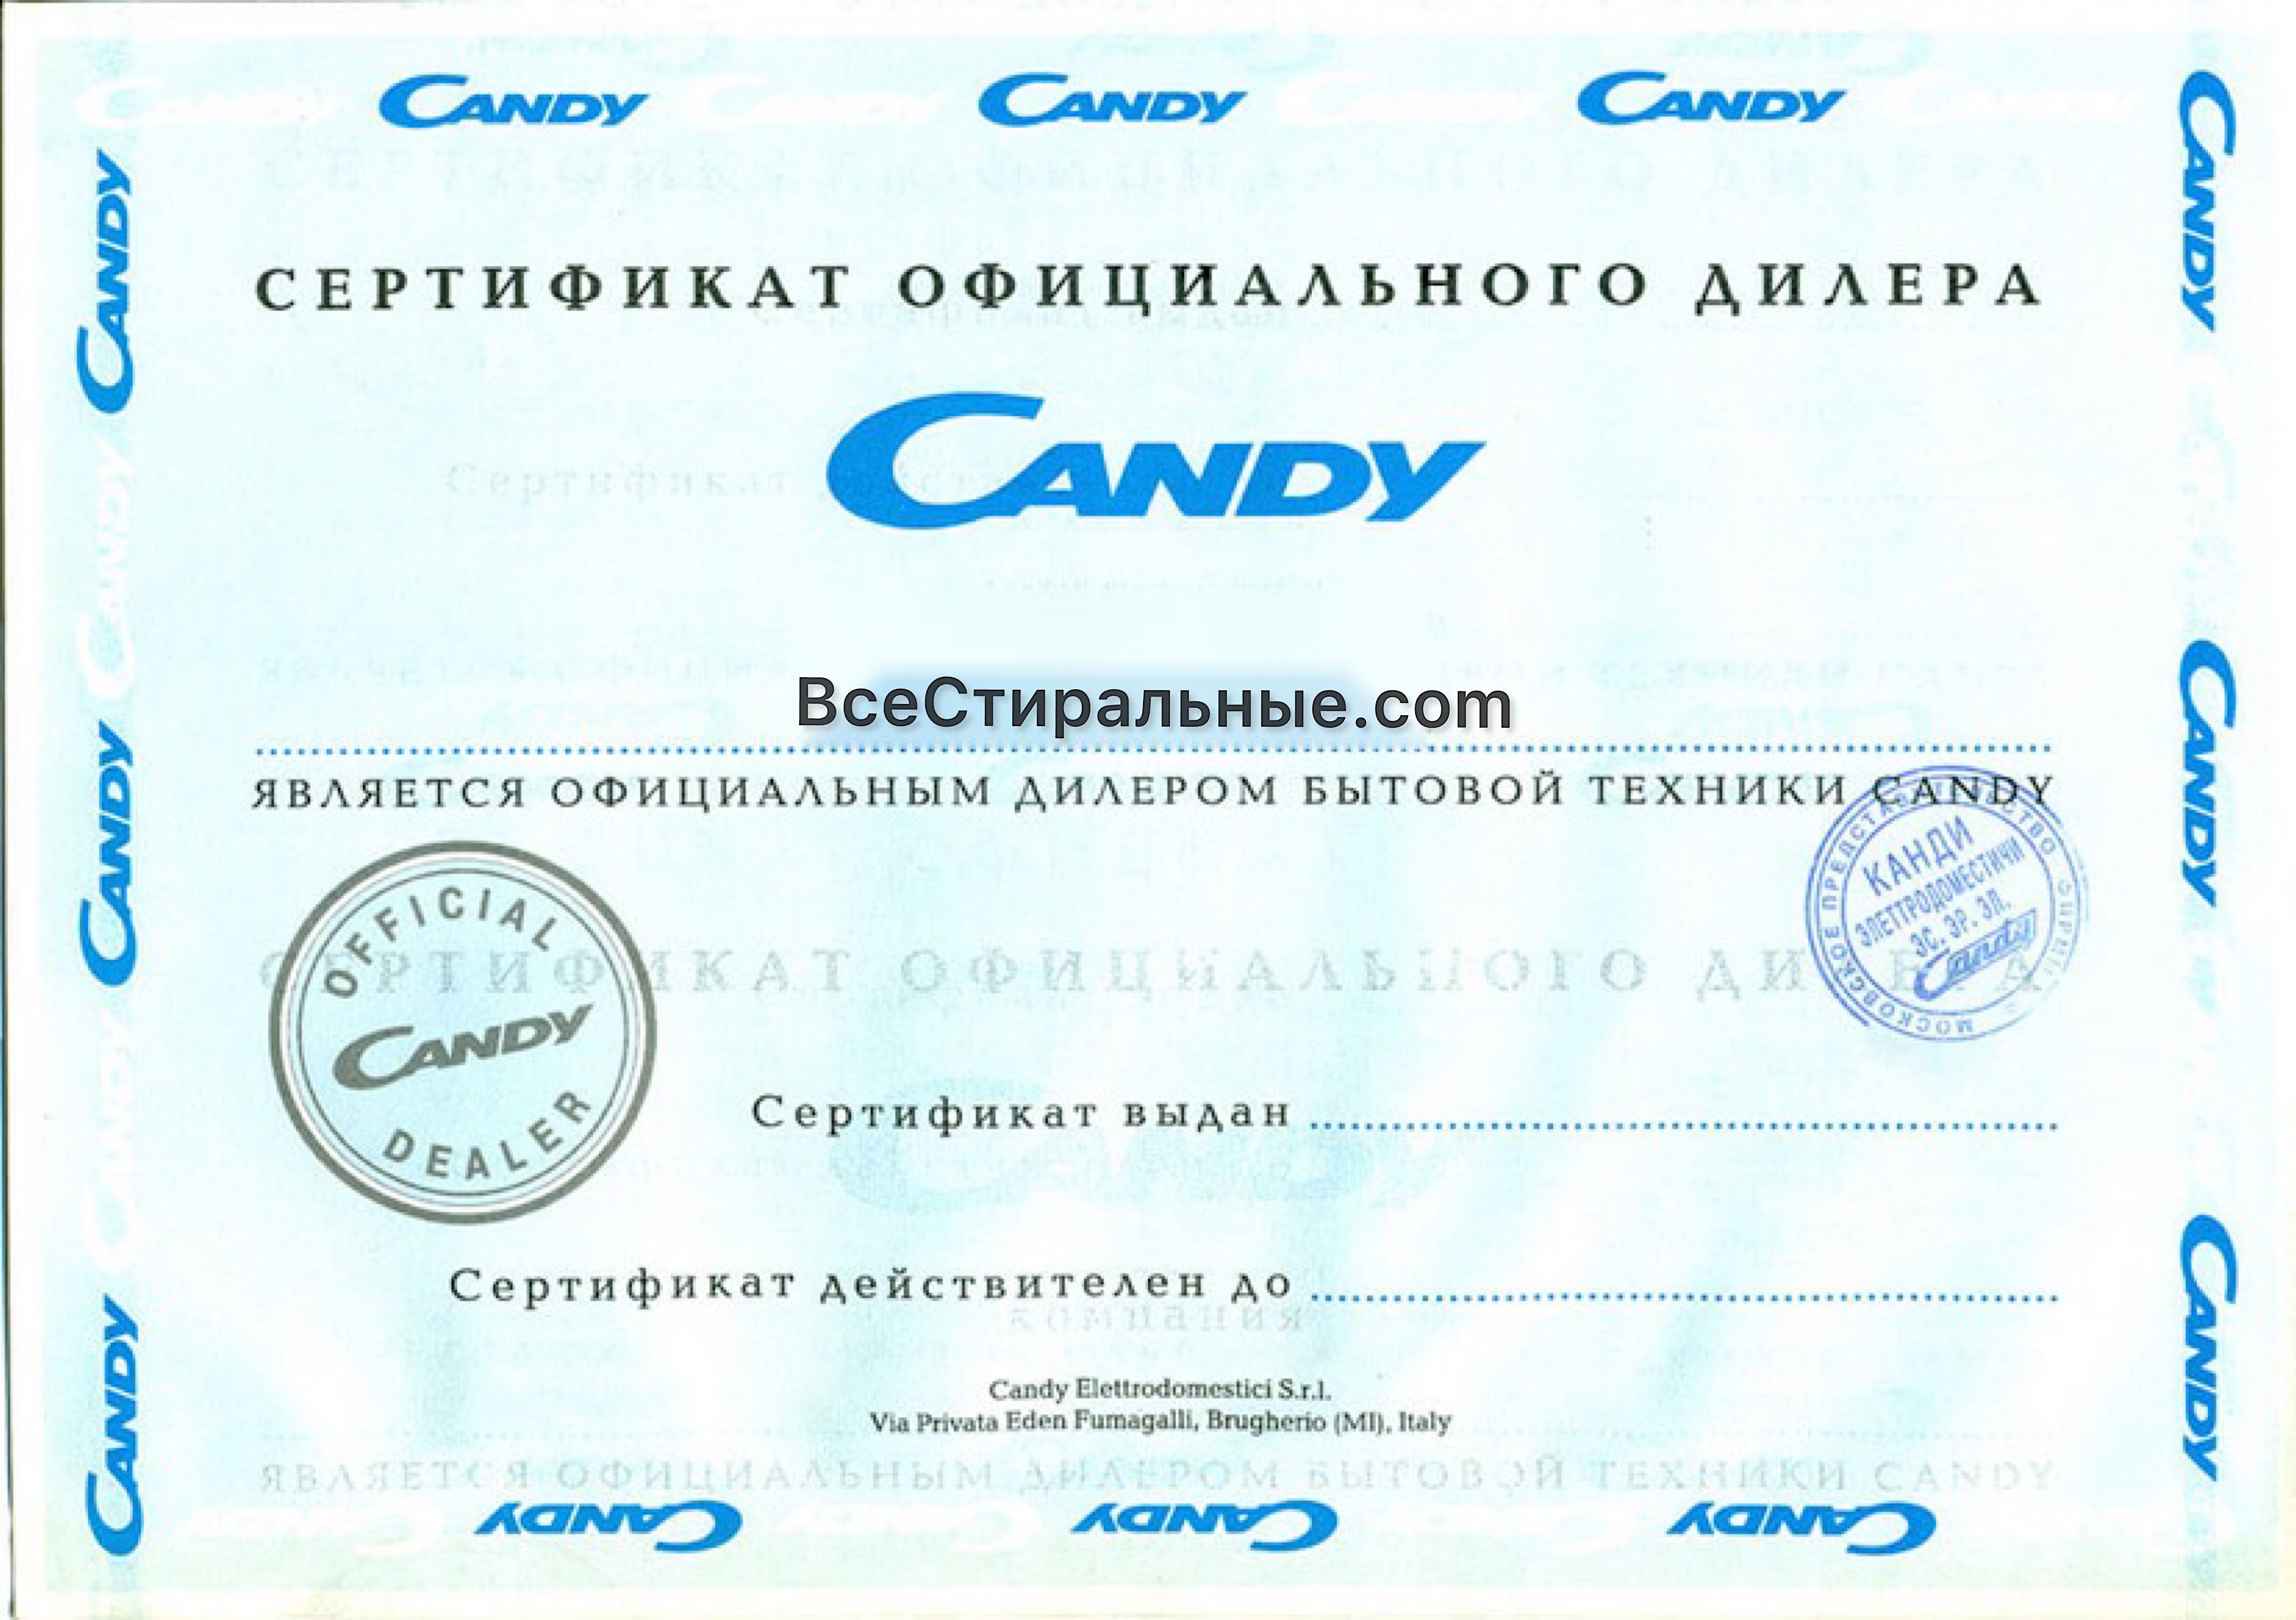 Candy CTD 125